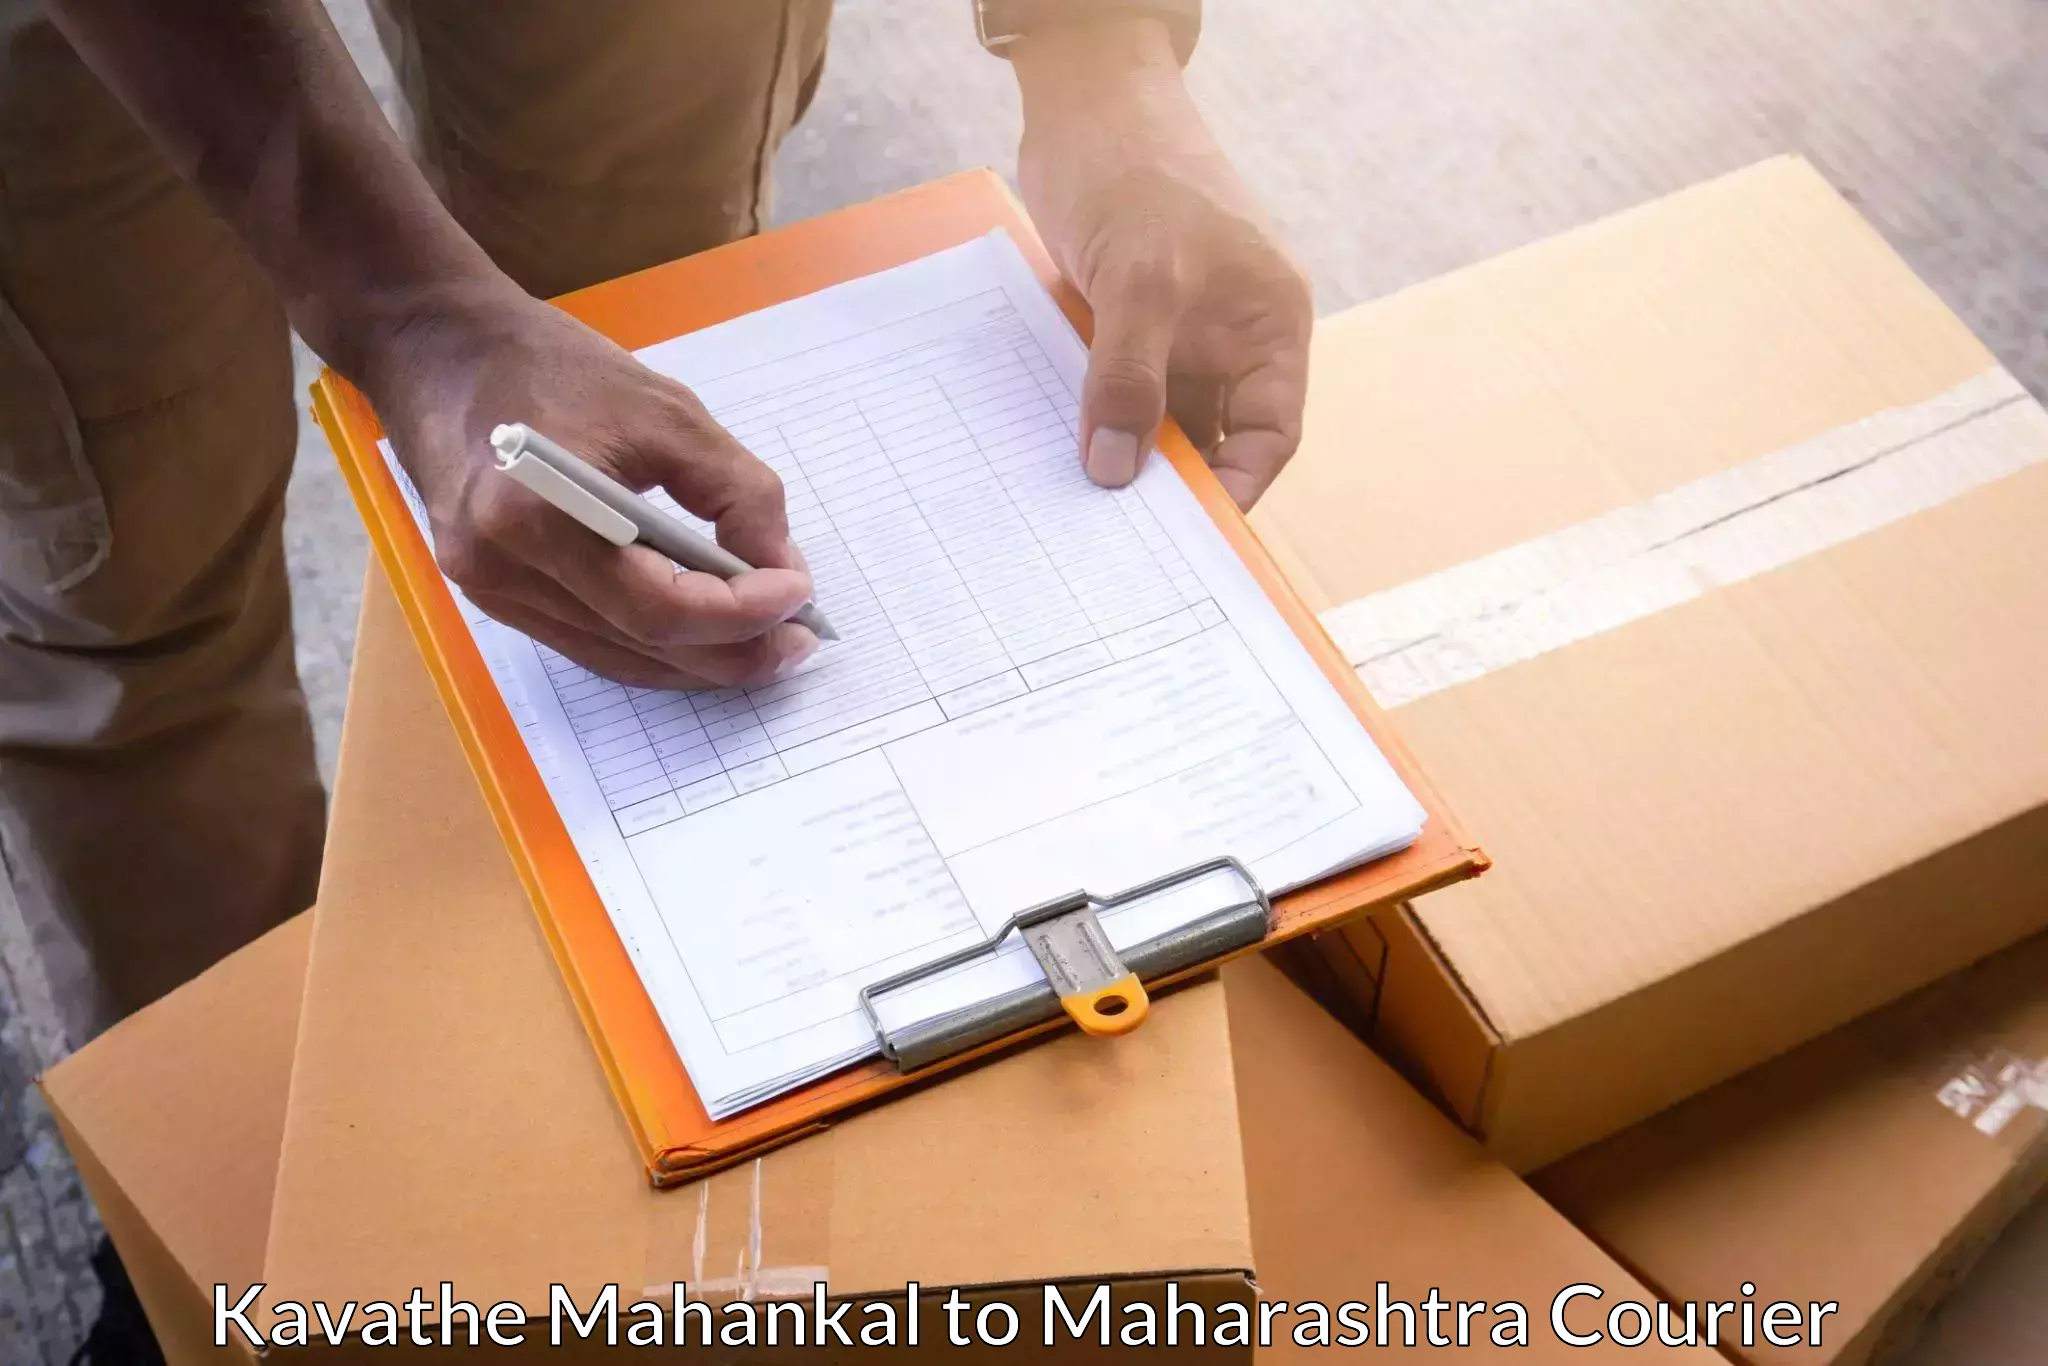 Specialized shipment handling in Kavathe Mahankal to Kannad